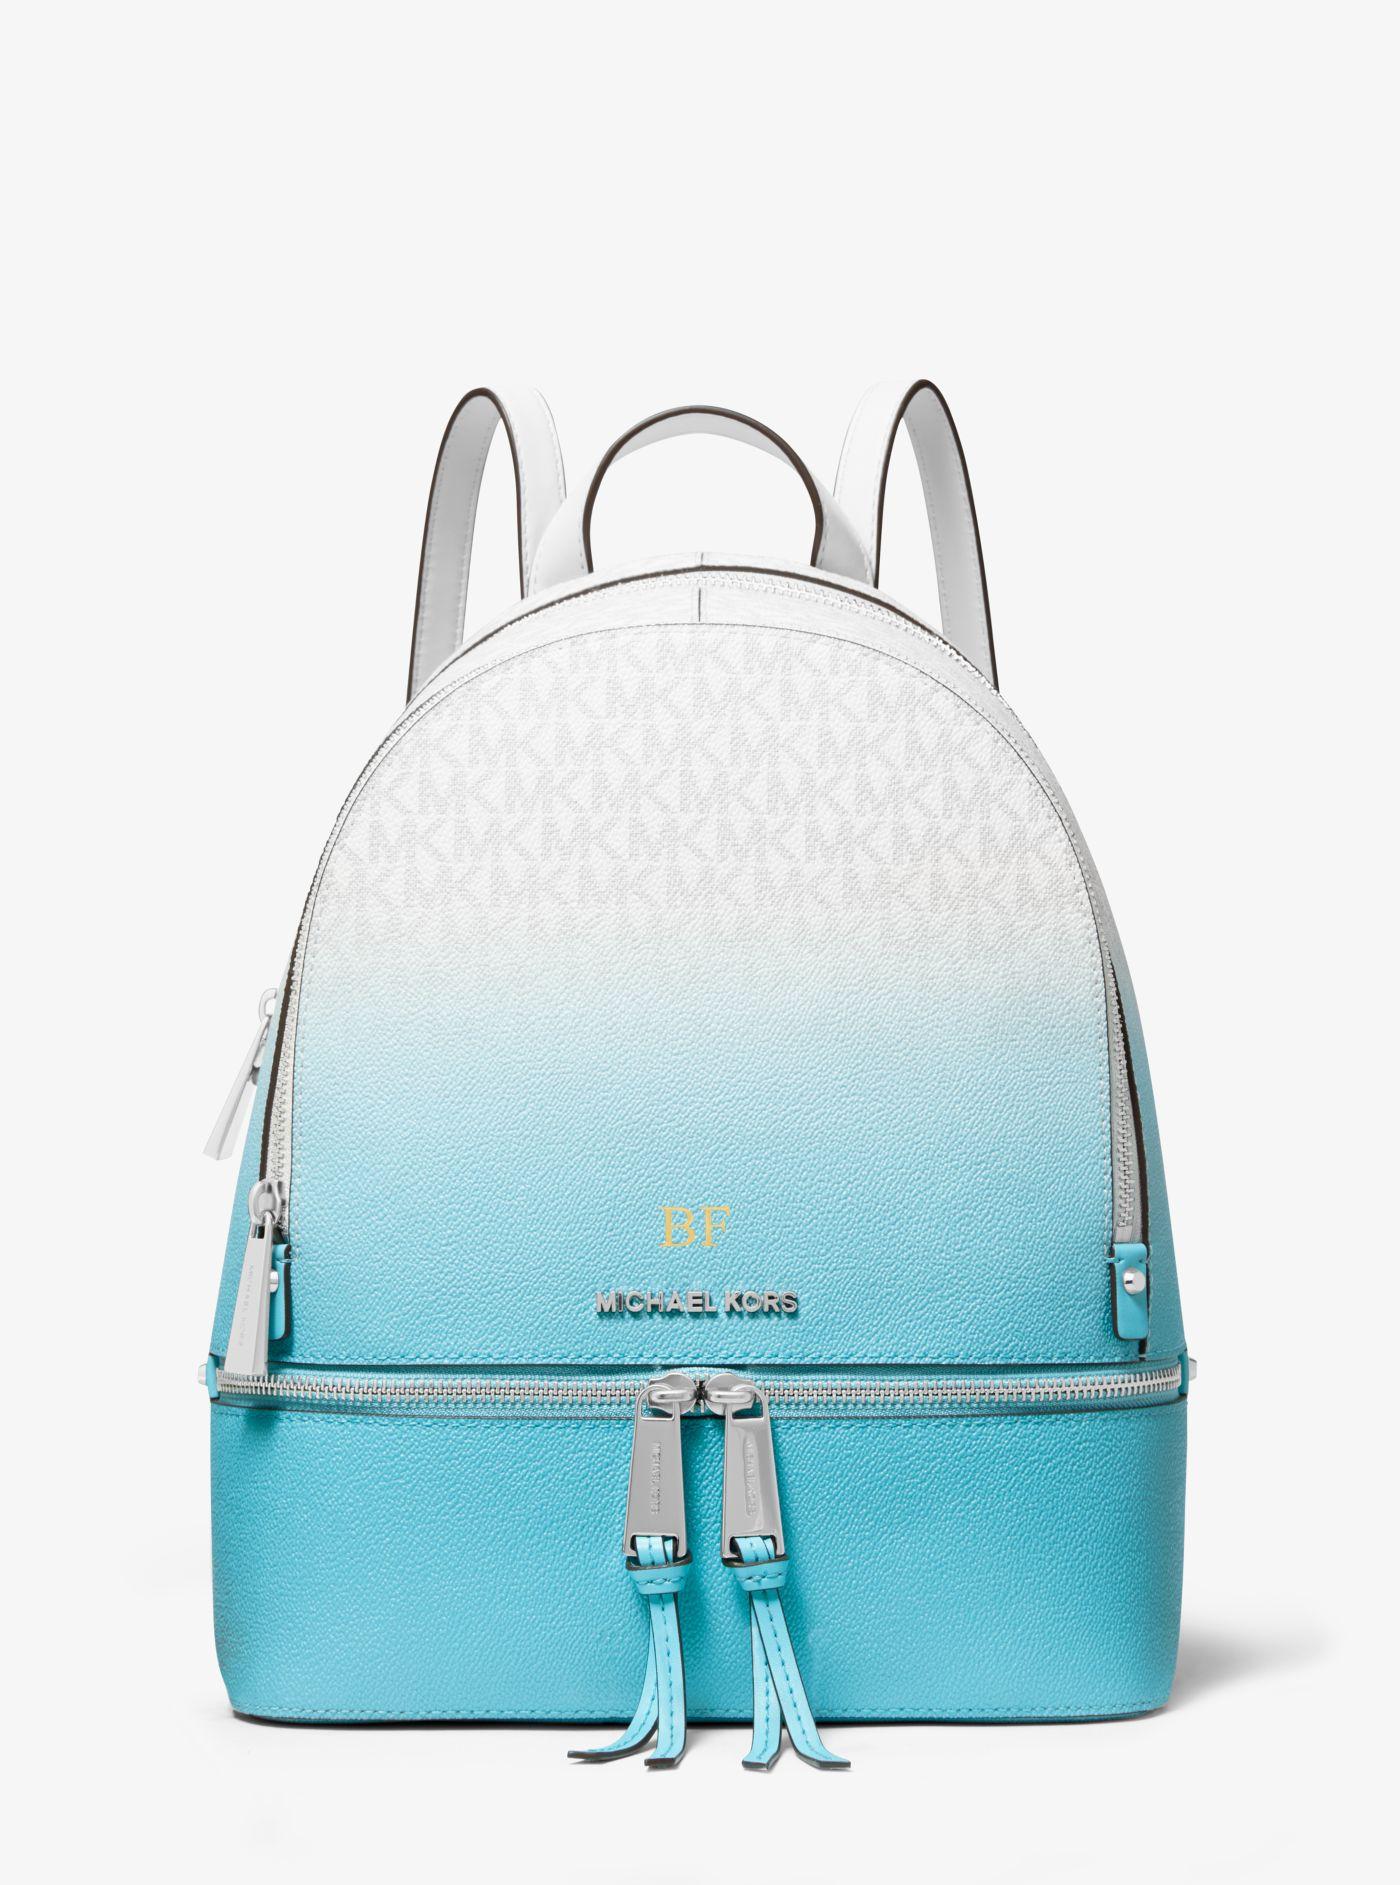 Michael Kors Rhea Medium Ombré Logo Backpack in Blue | Lyst Australia